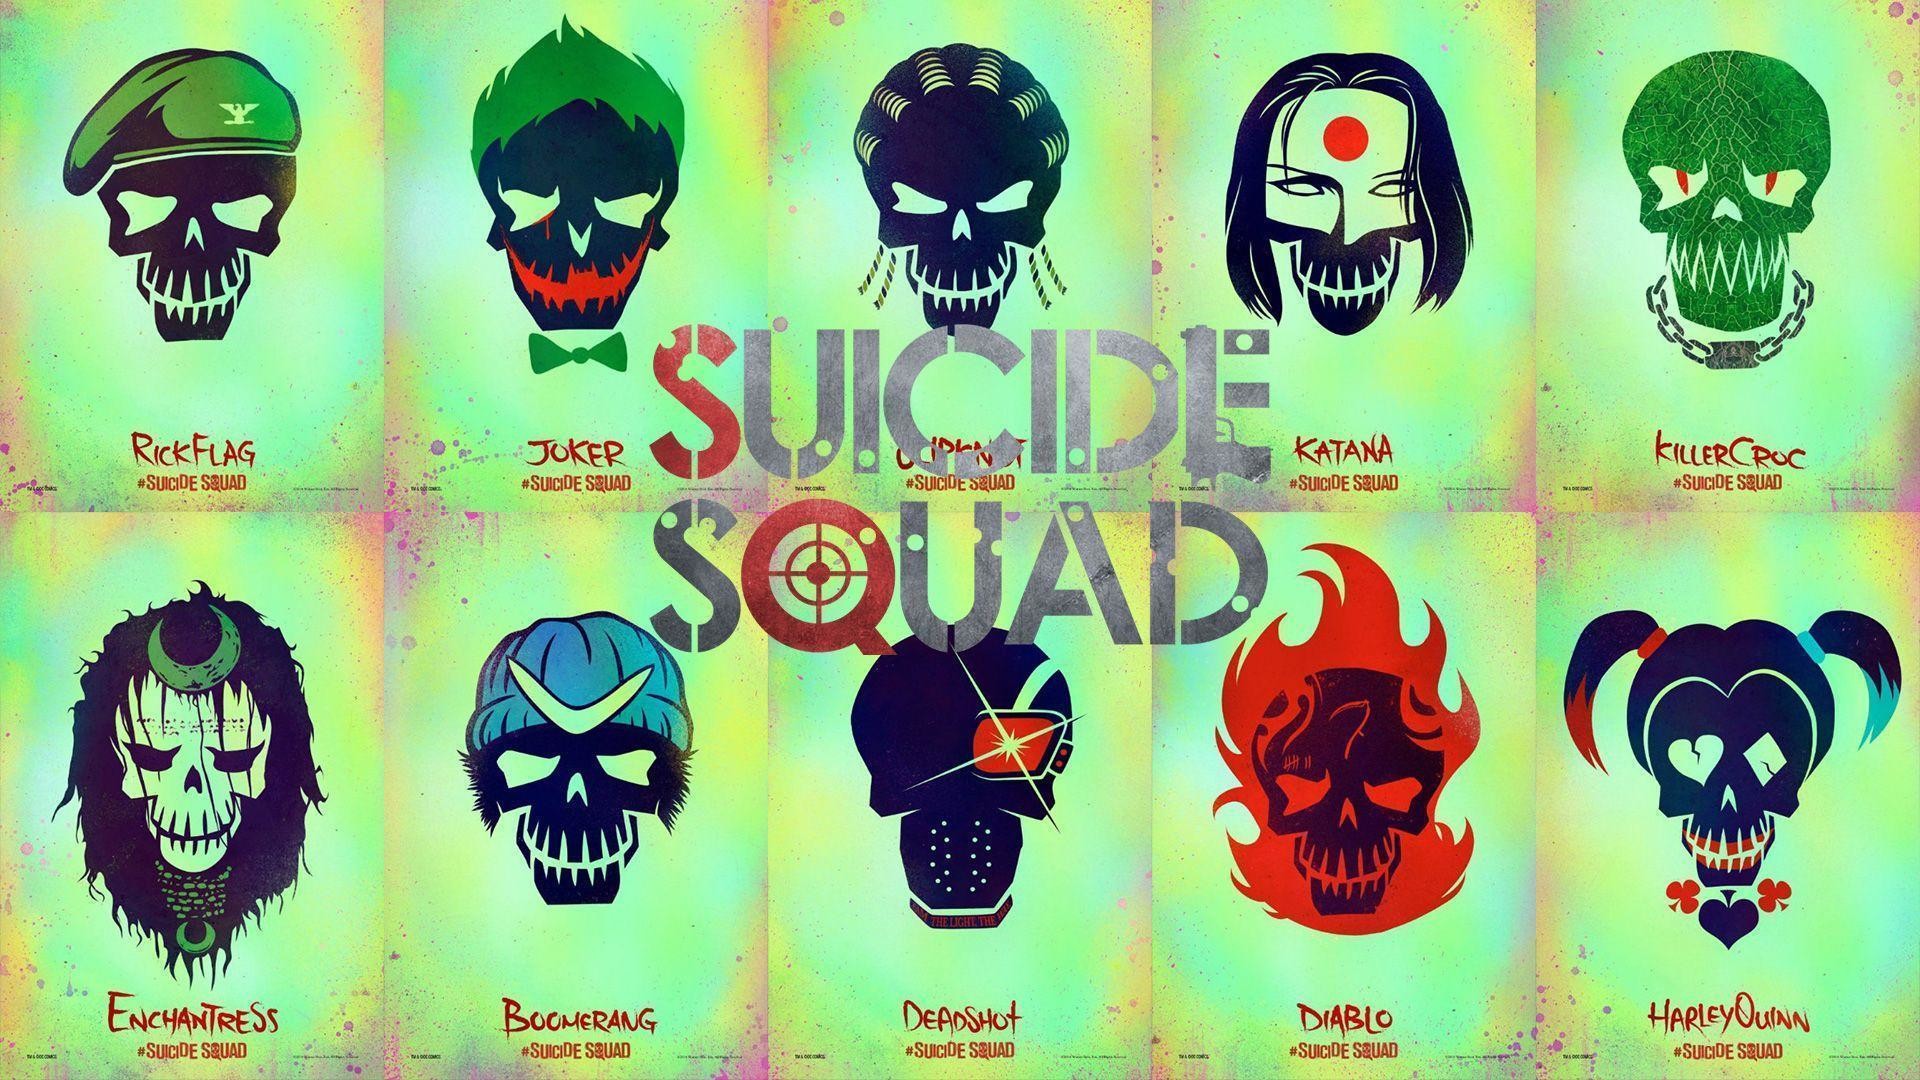 1920x1080 Suicide Squad Joker Wallpaper - WallpaperSafari